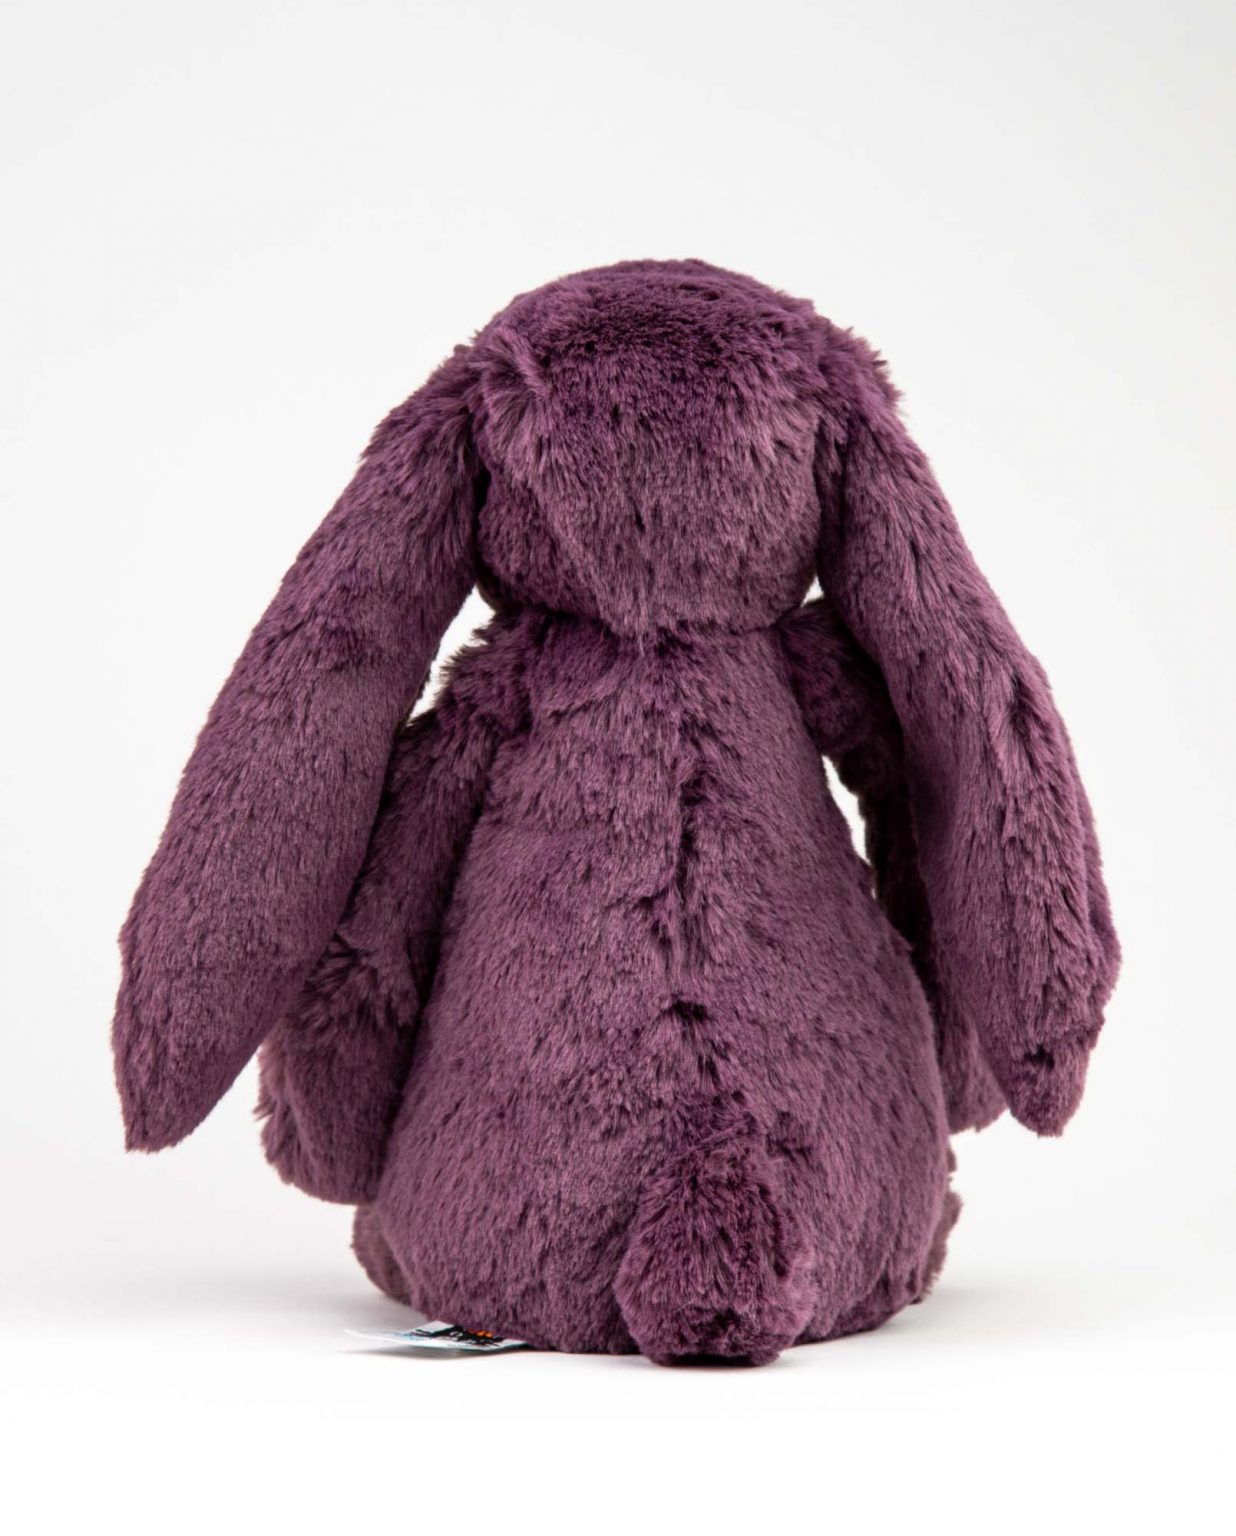 Jellycat Plum Bunny - Send a Cuddly